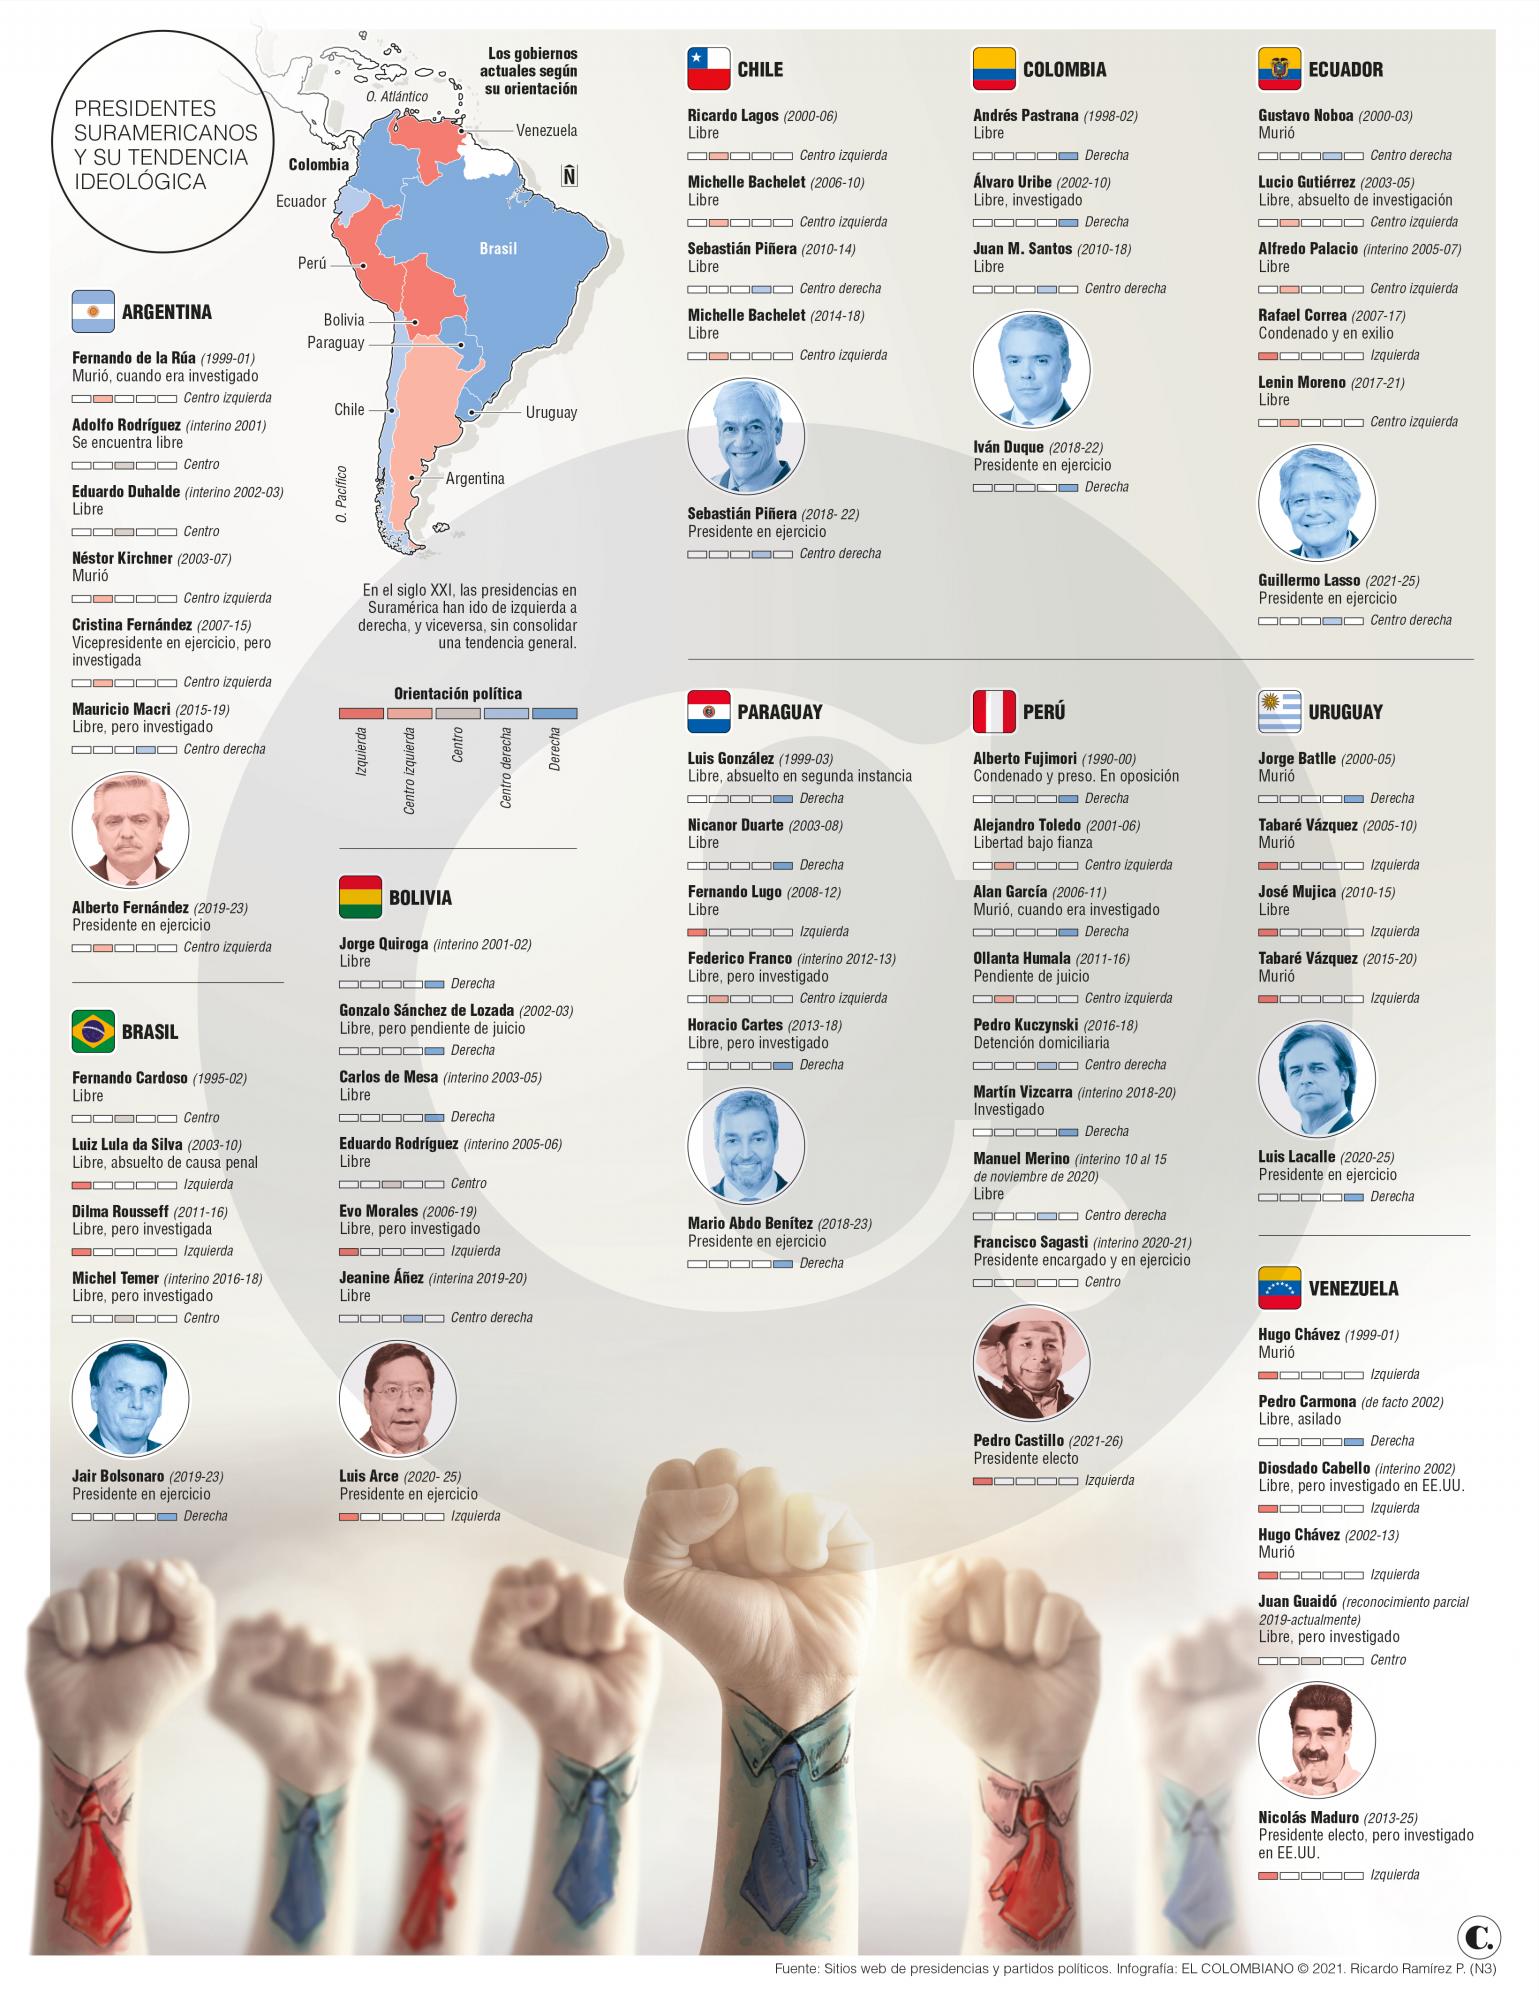 Suramérica, en un balancín de derecha a izquierda